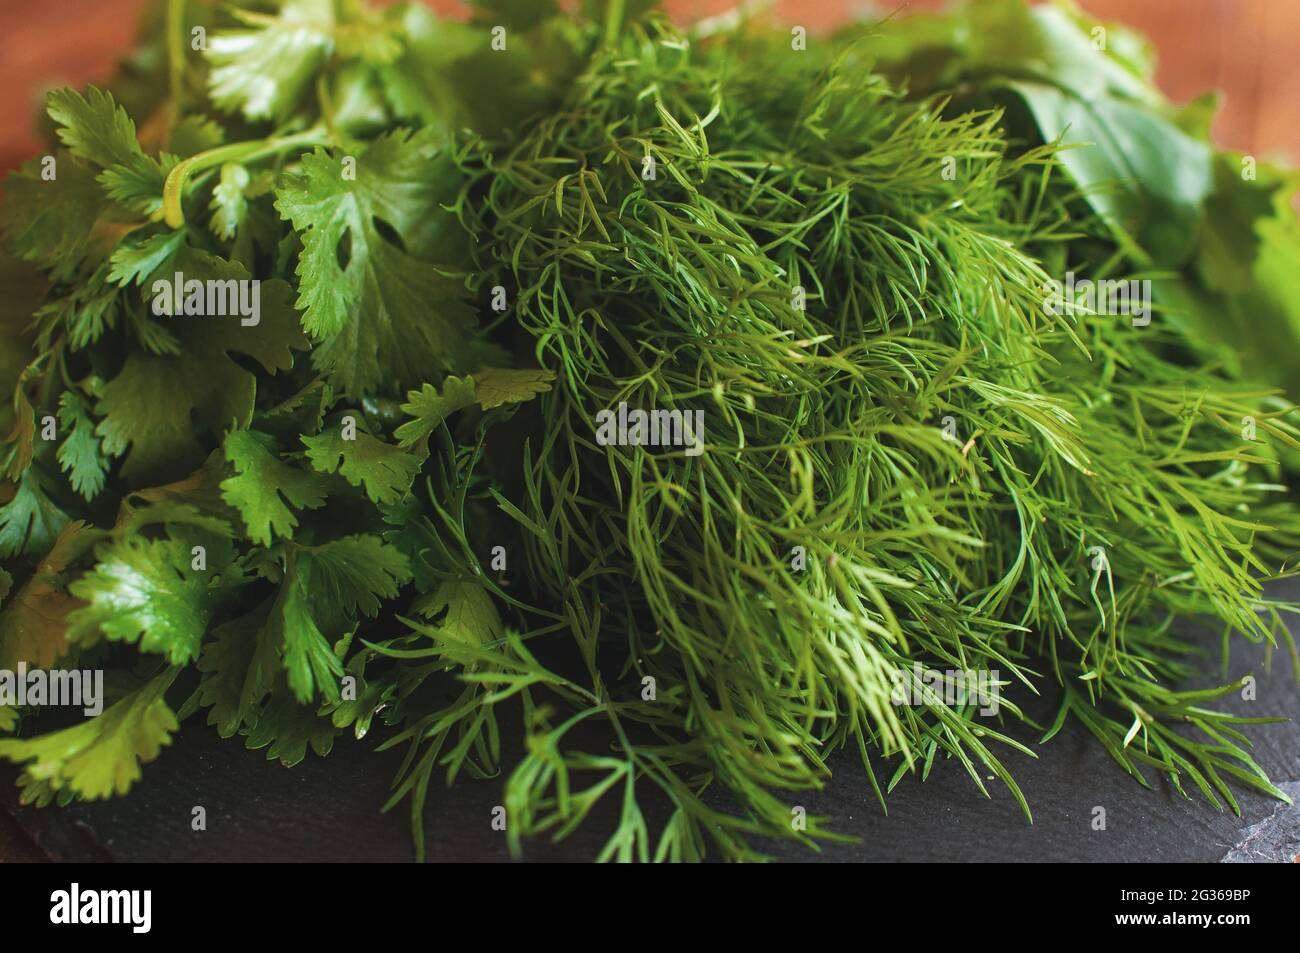 fresh arugula dill and parsley lies on a black board Stock Photo